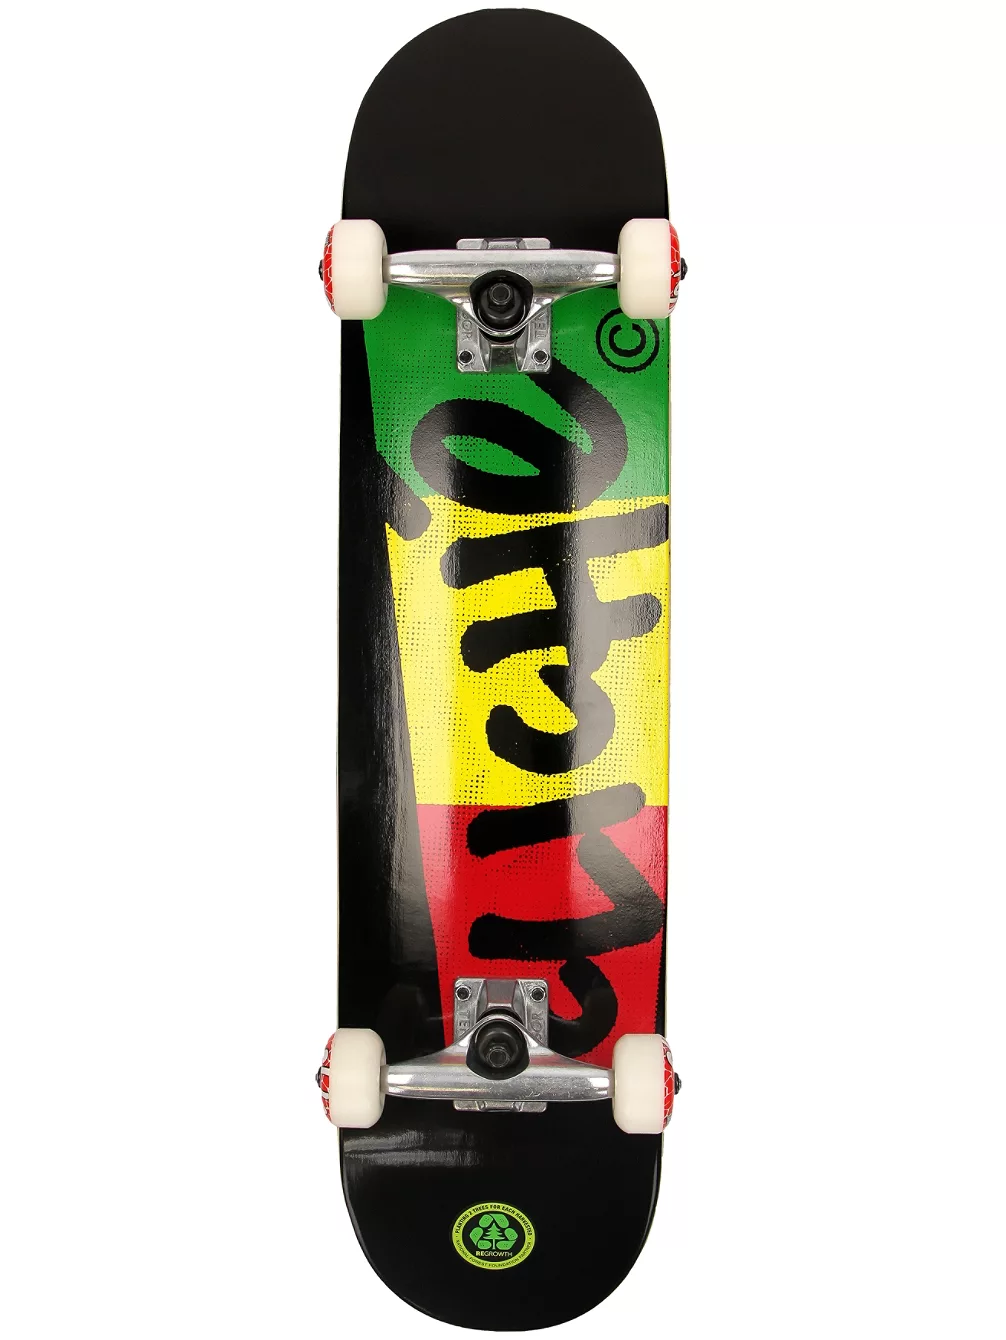 The Cliché Block Complete Rasta 7.5 Complete Skateboard を購入する